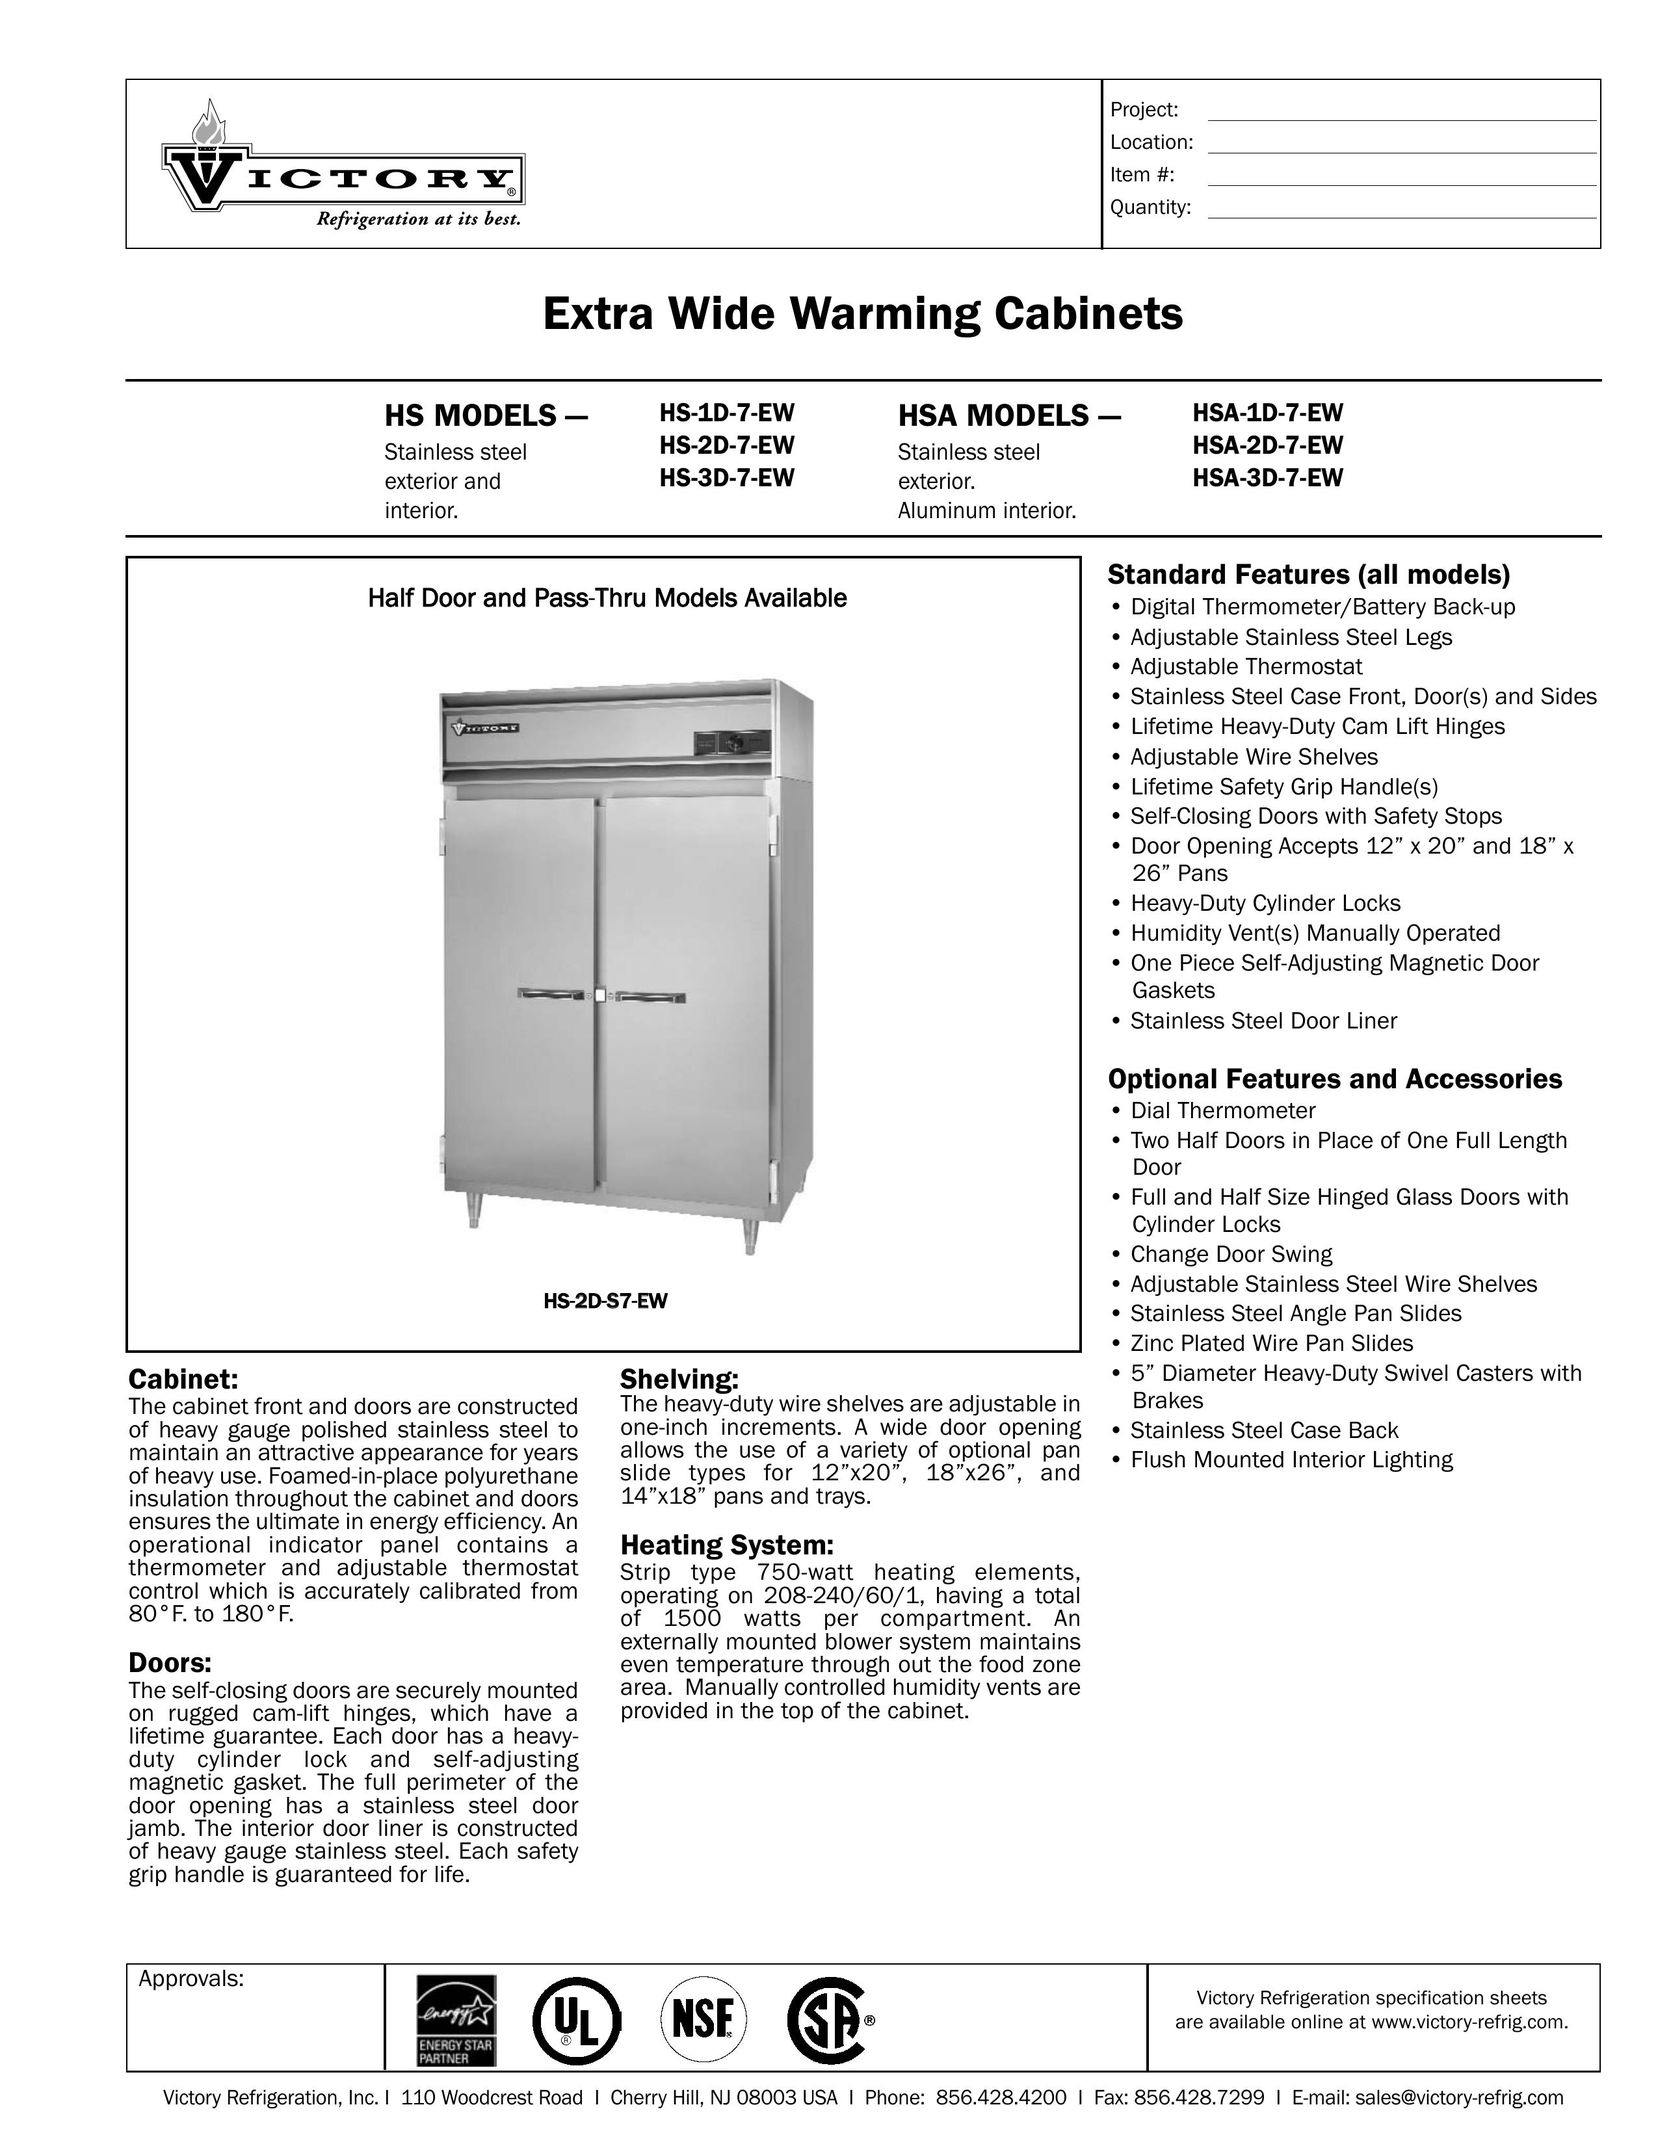 Victory Refrigeration HS-2D-7-EW Food Warmer User Manual